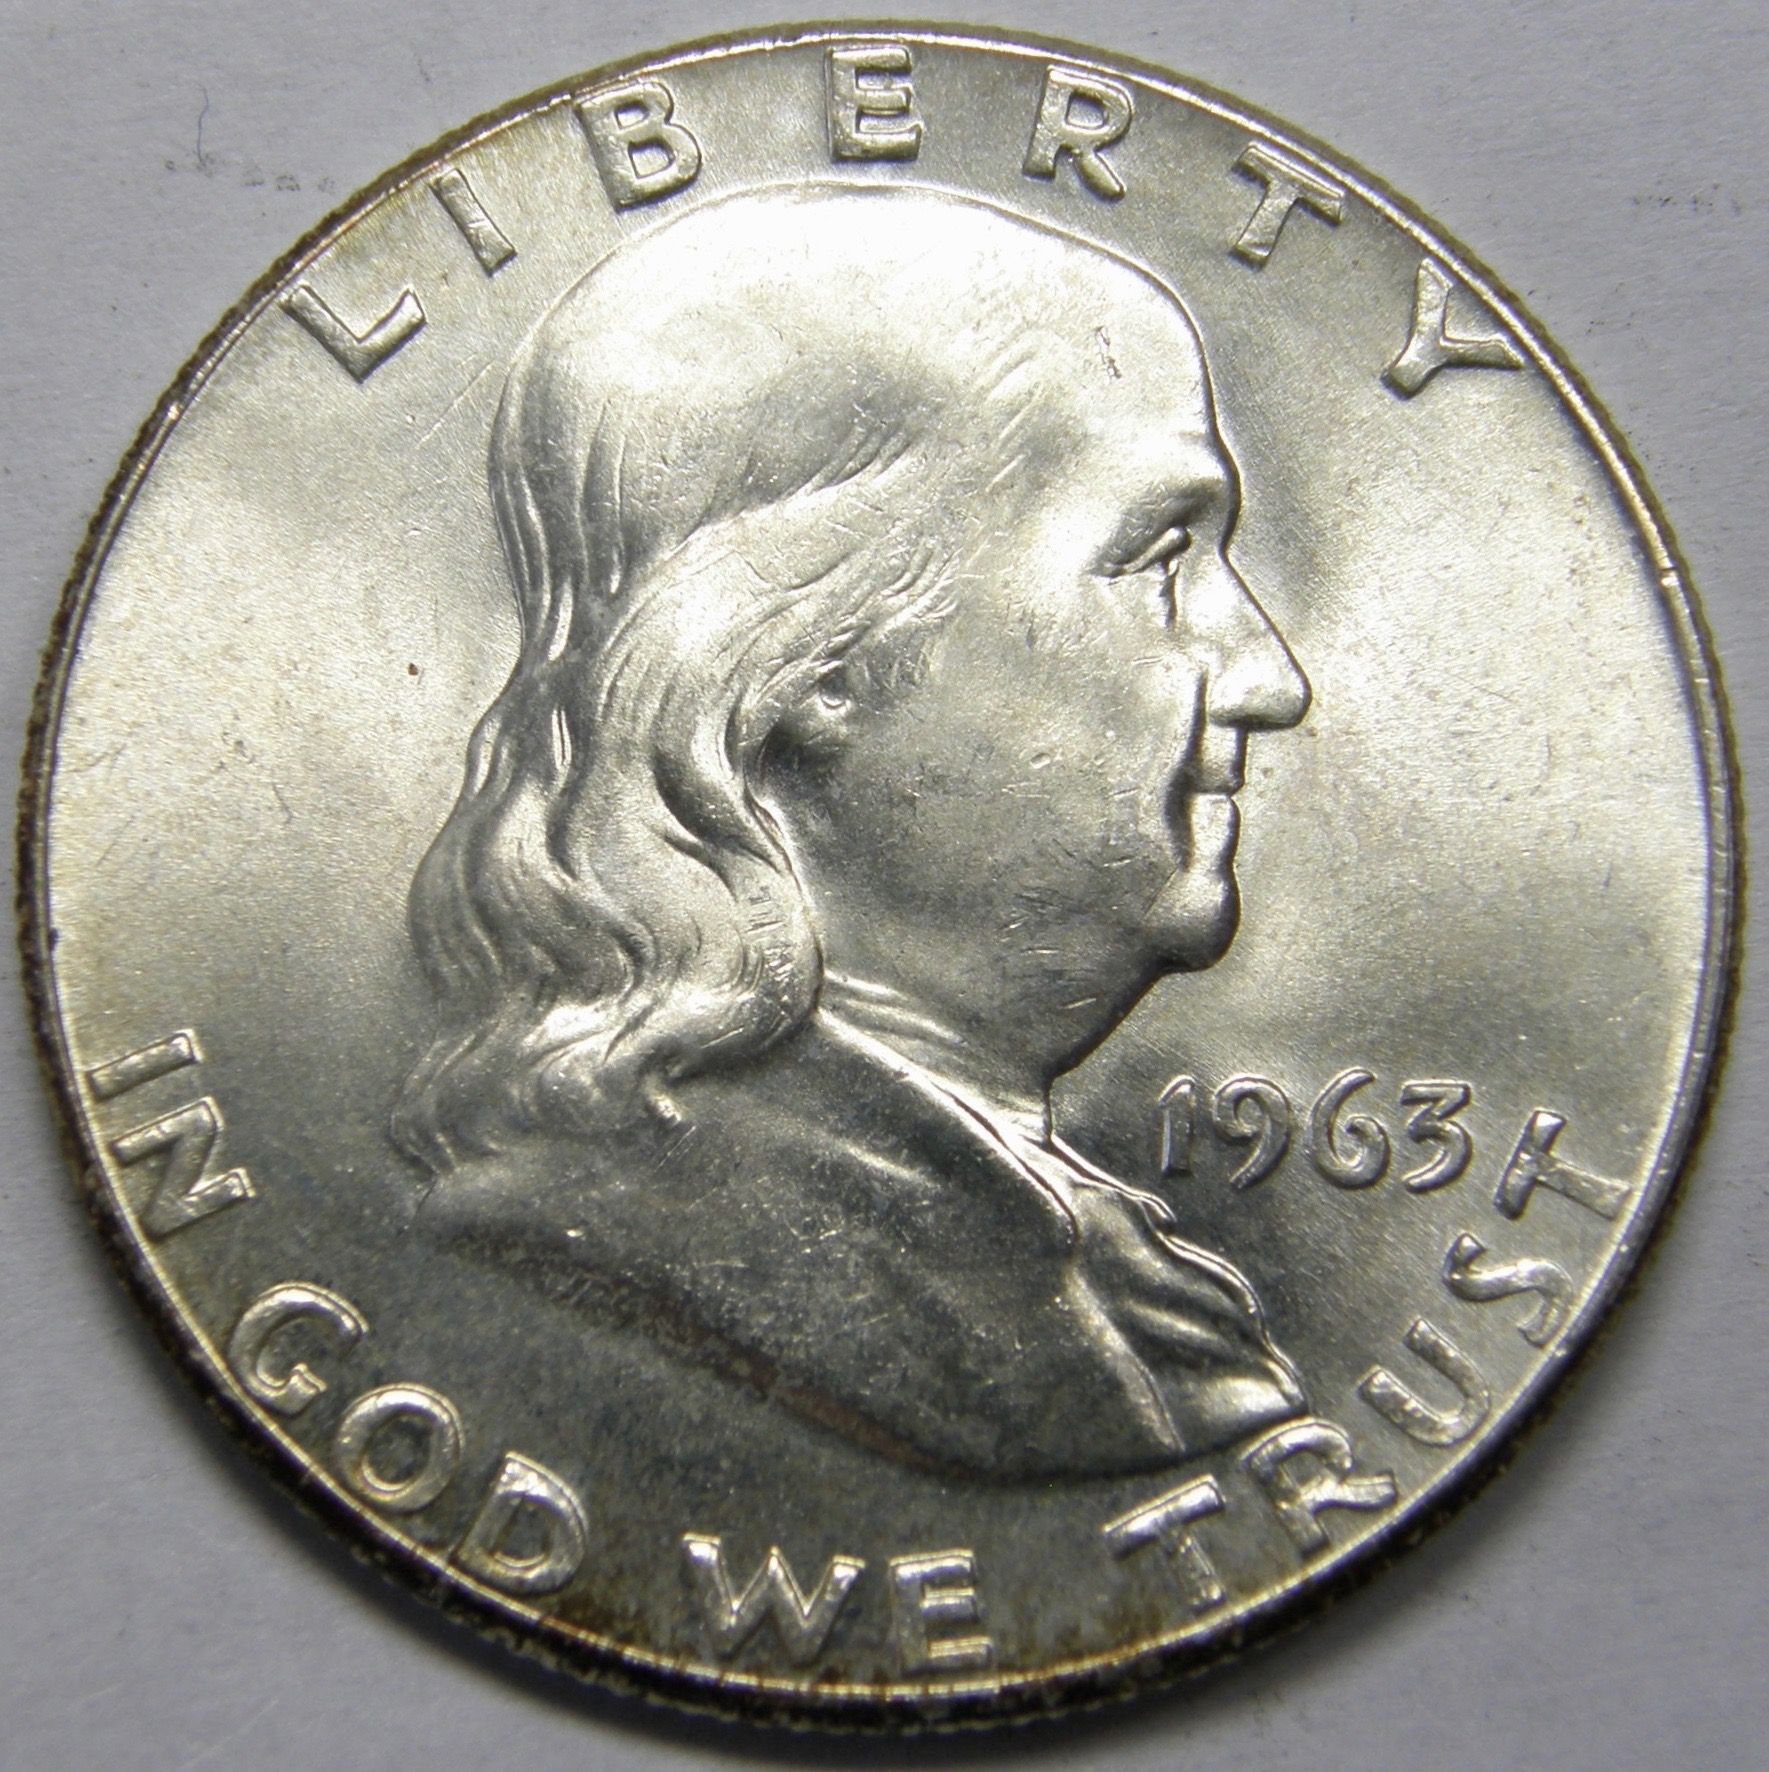 1963 P Franklin Half Dollar #5LE - for sale, buy now online - Item #1376011769 x 1772